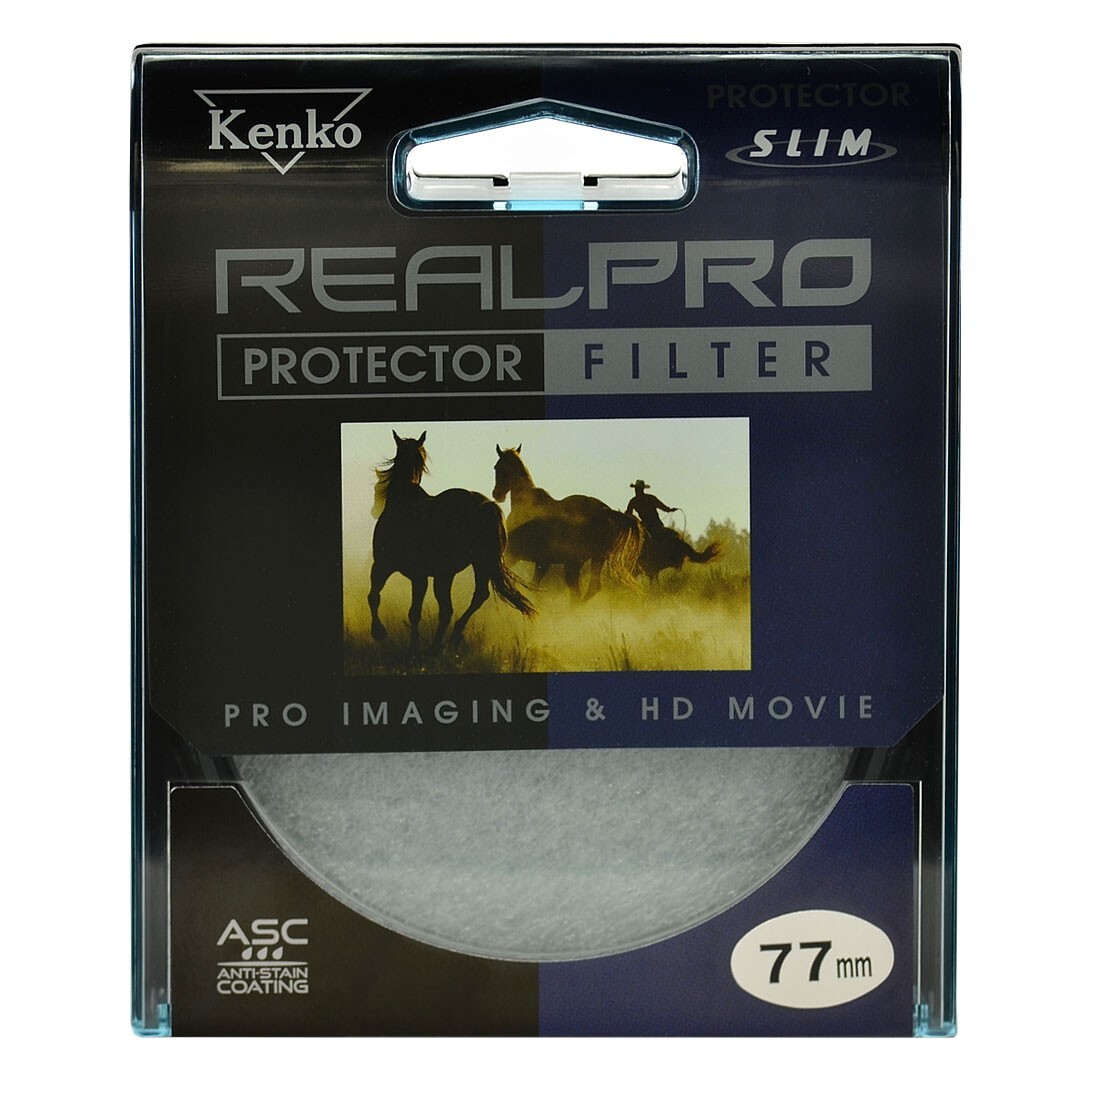 Really protect. Фильтр Kenko 49s real Pro UV. Kenko кофе. +Kenko +REALPRO +UV +82mm +светофильтр купить. +Kenko +ZX +Protector купить.